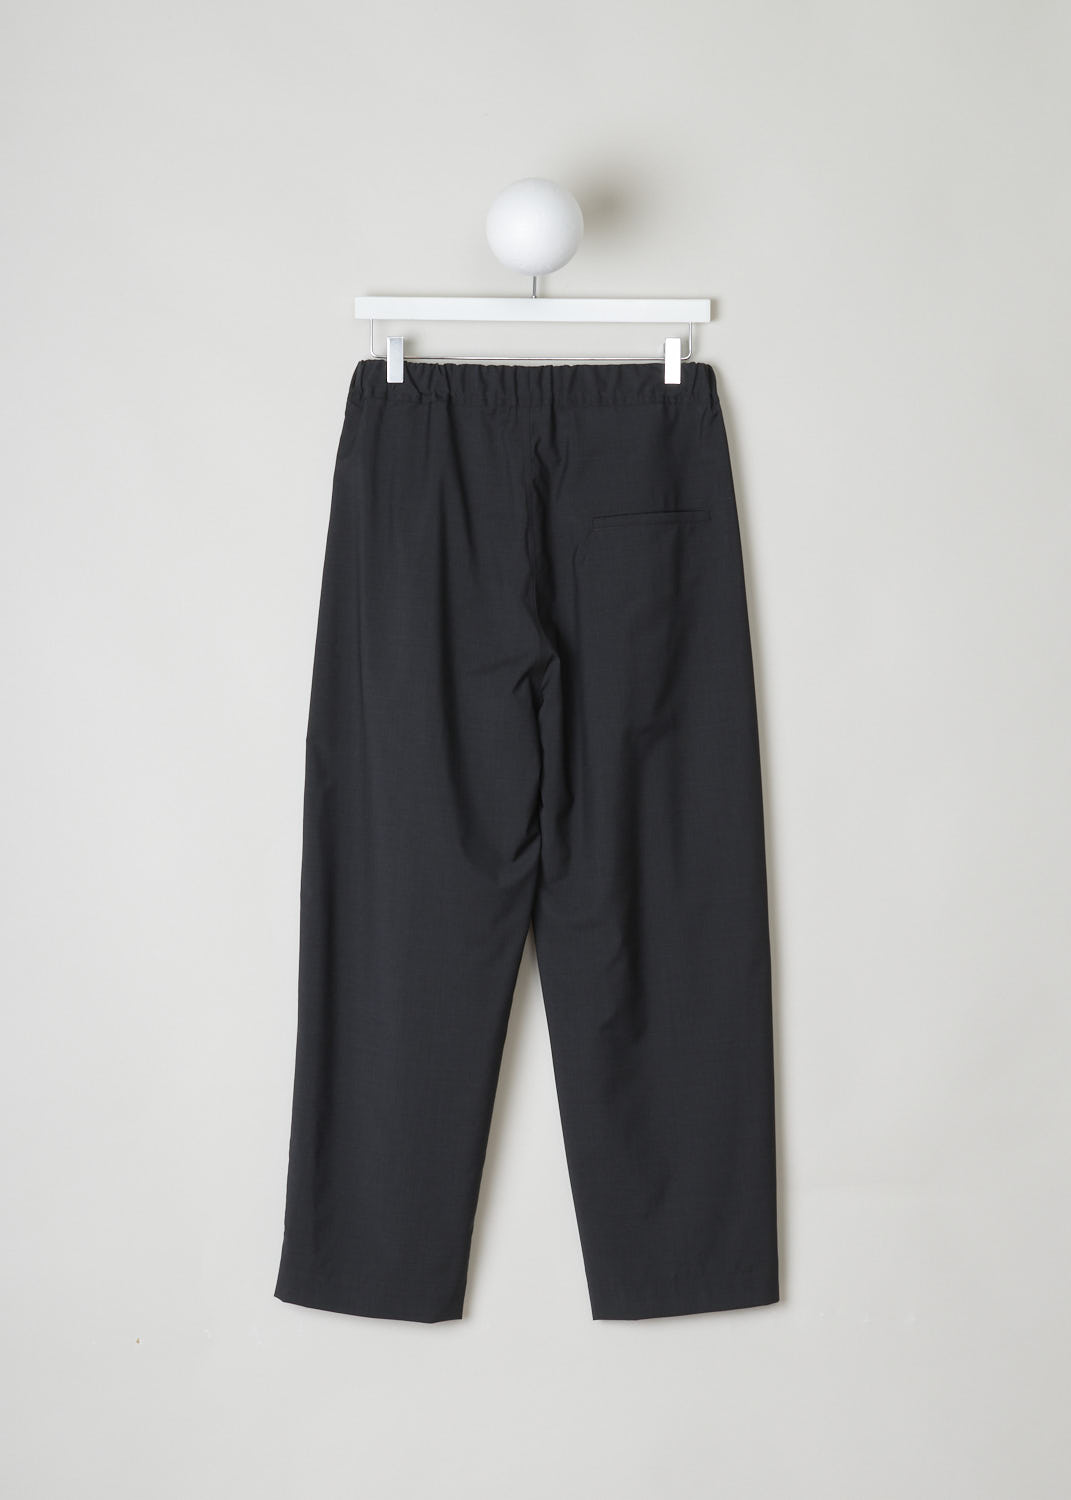 Charcoal pants with elasticated waistband at Kiki's Stocksale